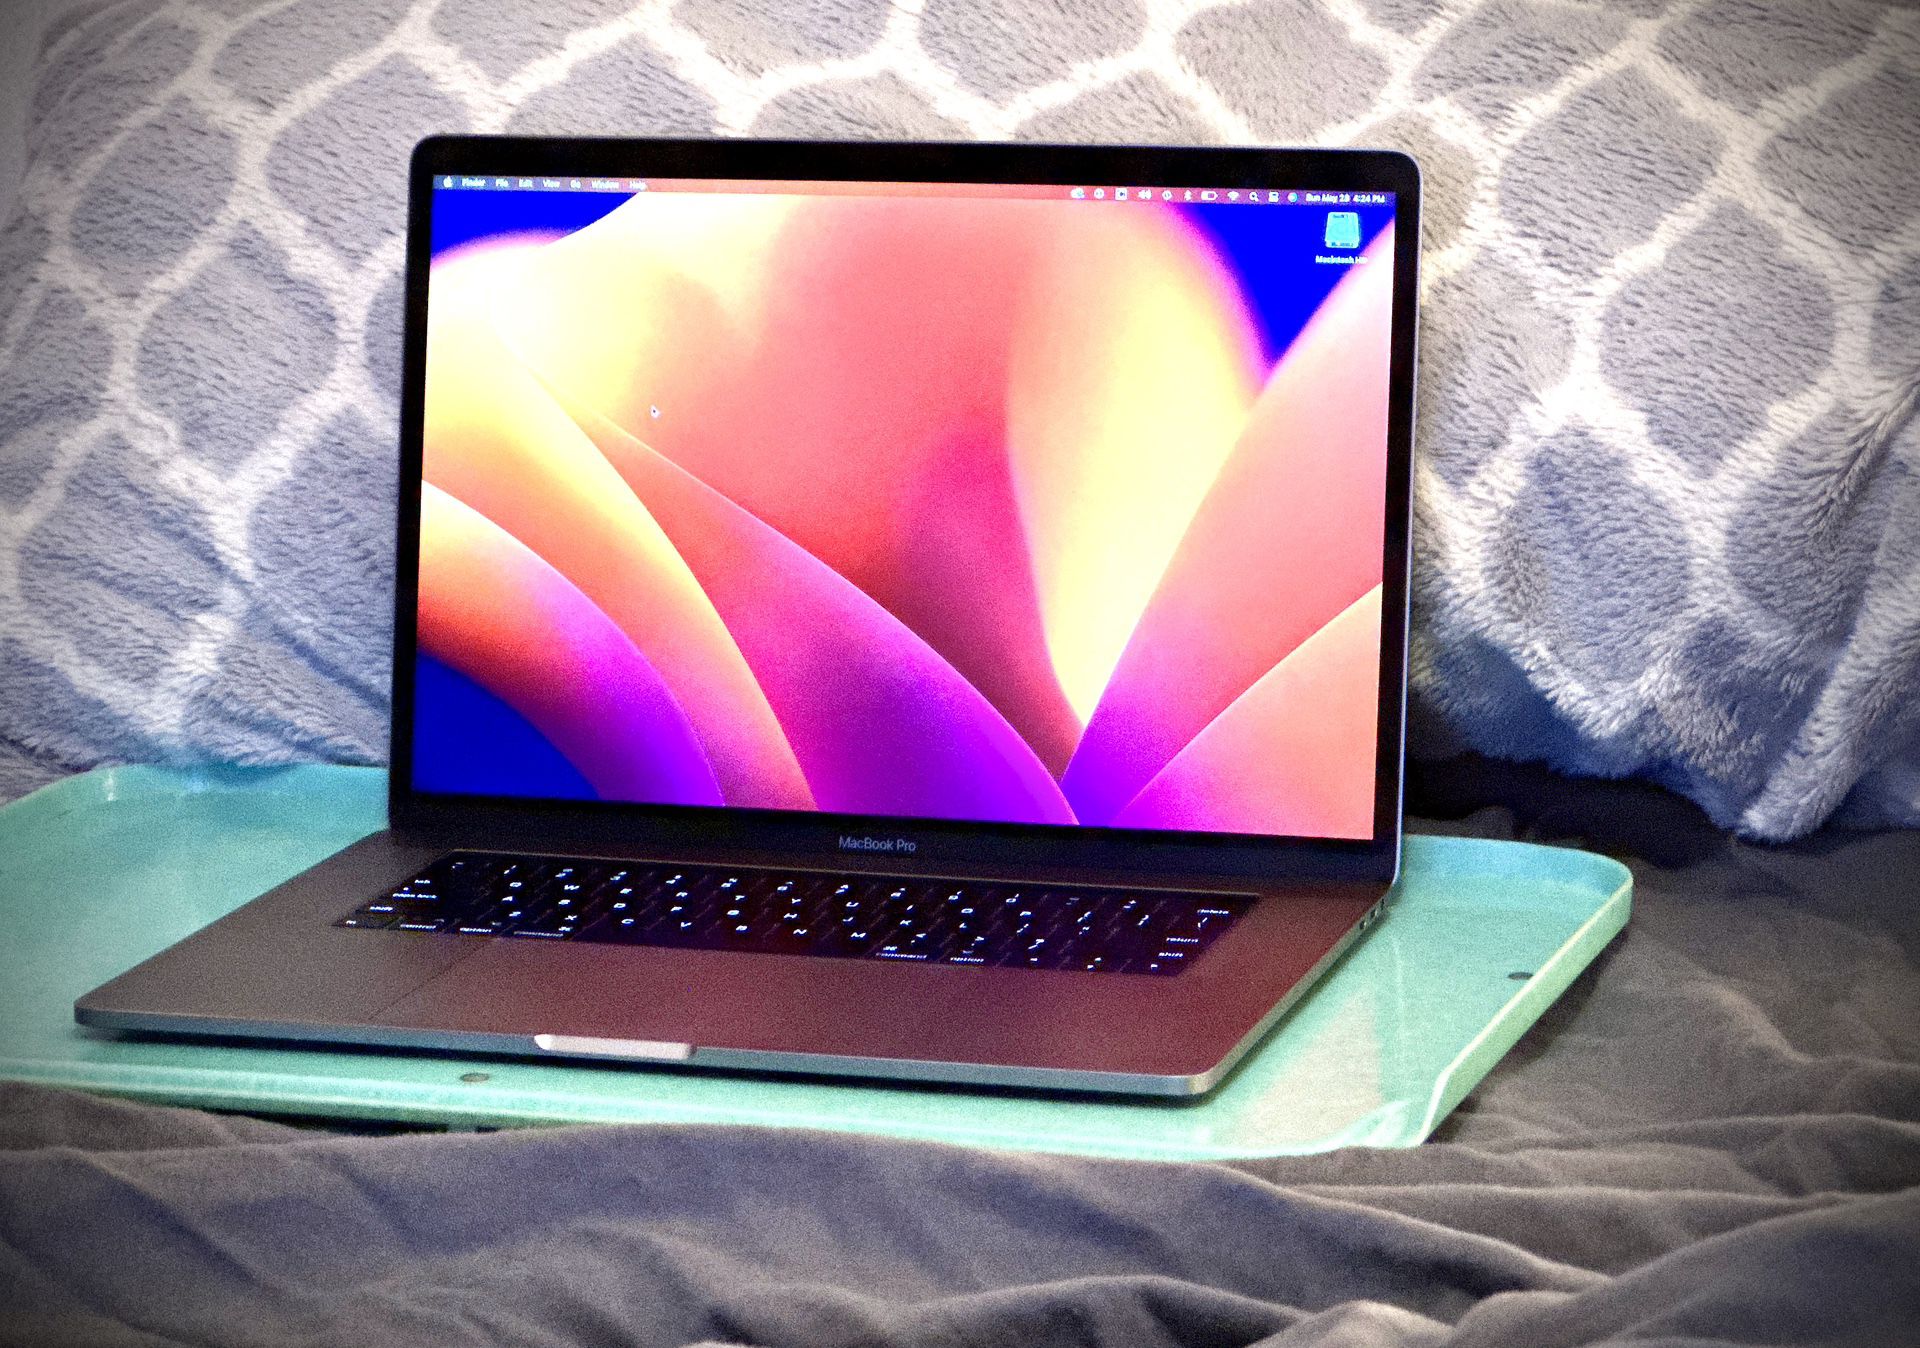 Apple MacBook Pro 15” 2.8 GHz Intel Core i7 Intel 